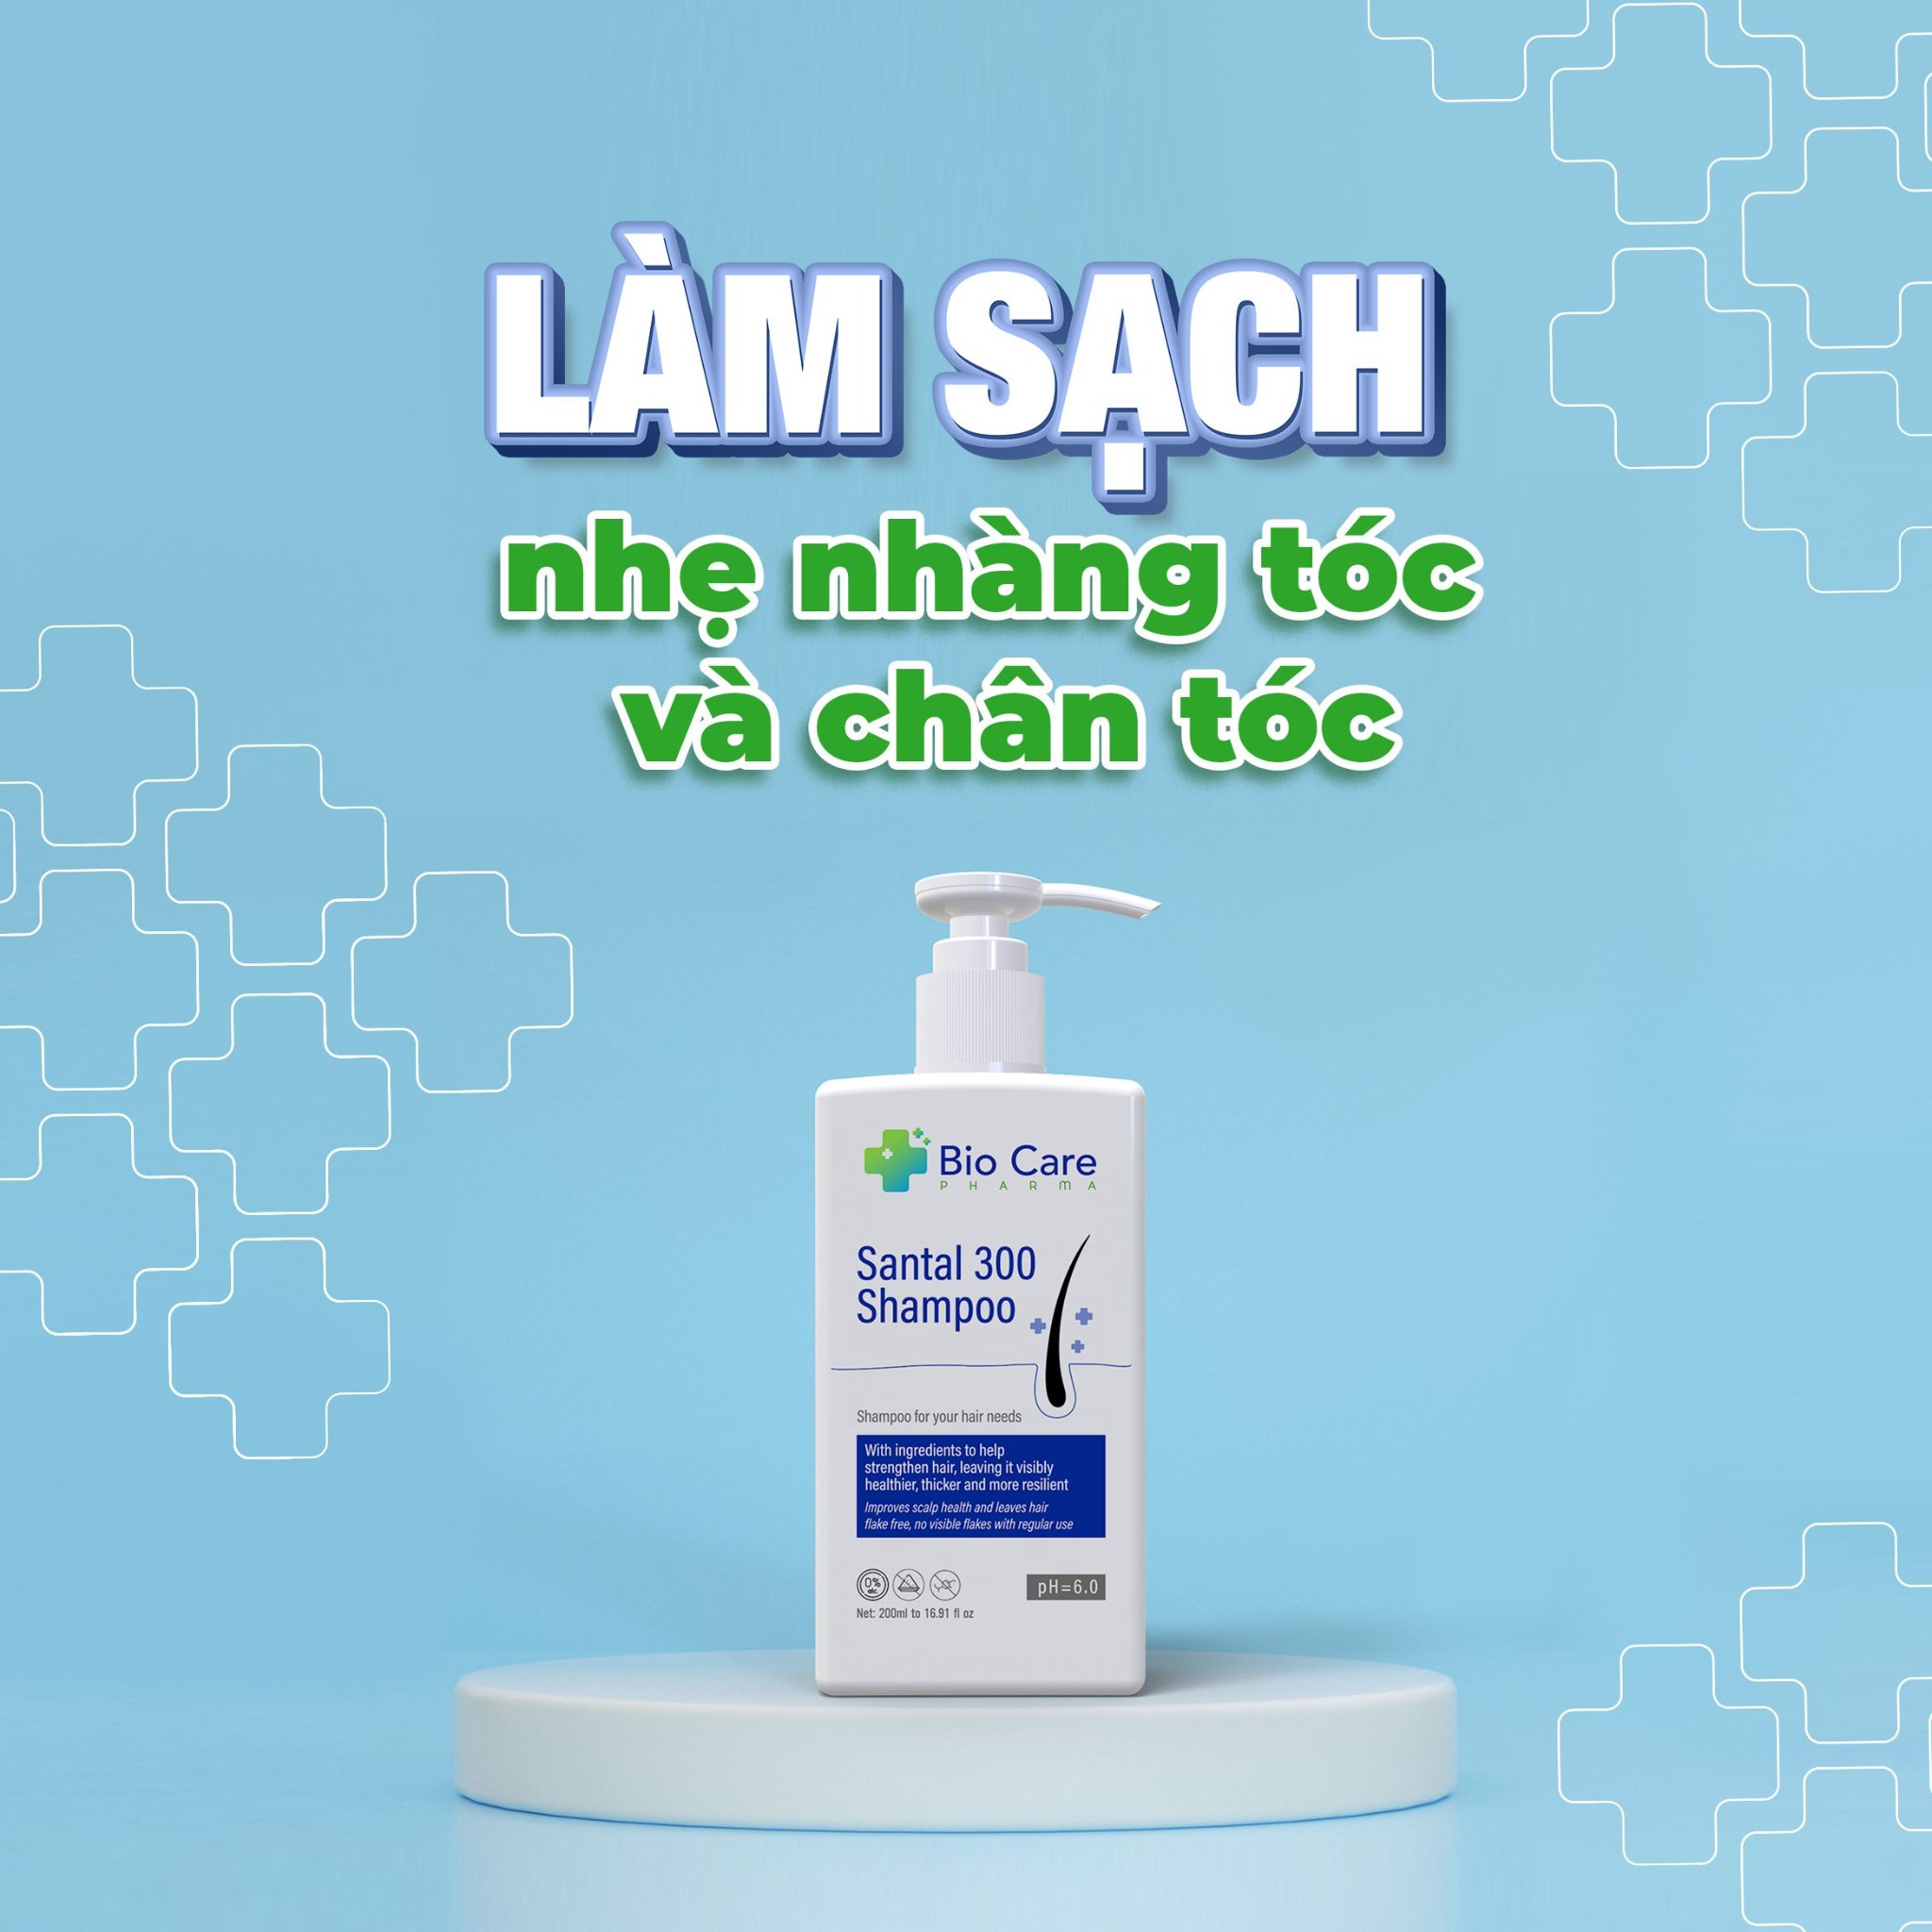 Dầu gội dược liệu BIO CARE PHARMA giảm gàu, nấm ngứa da đầu Santal 300 Shampoo 200ml